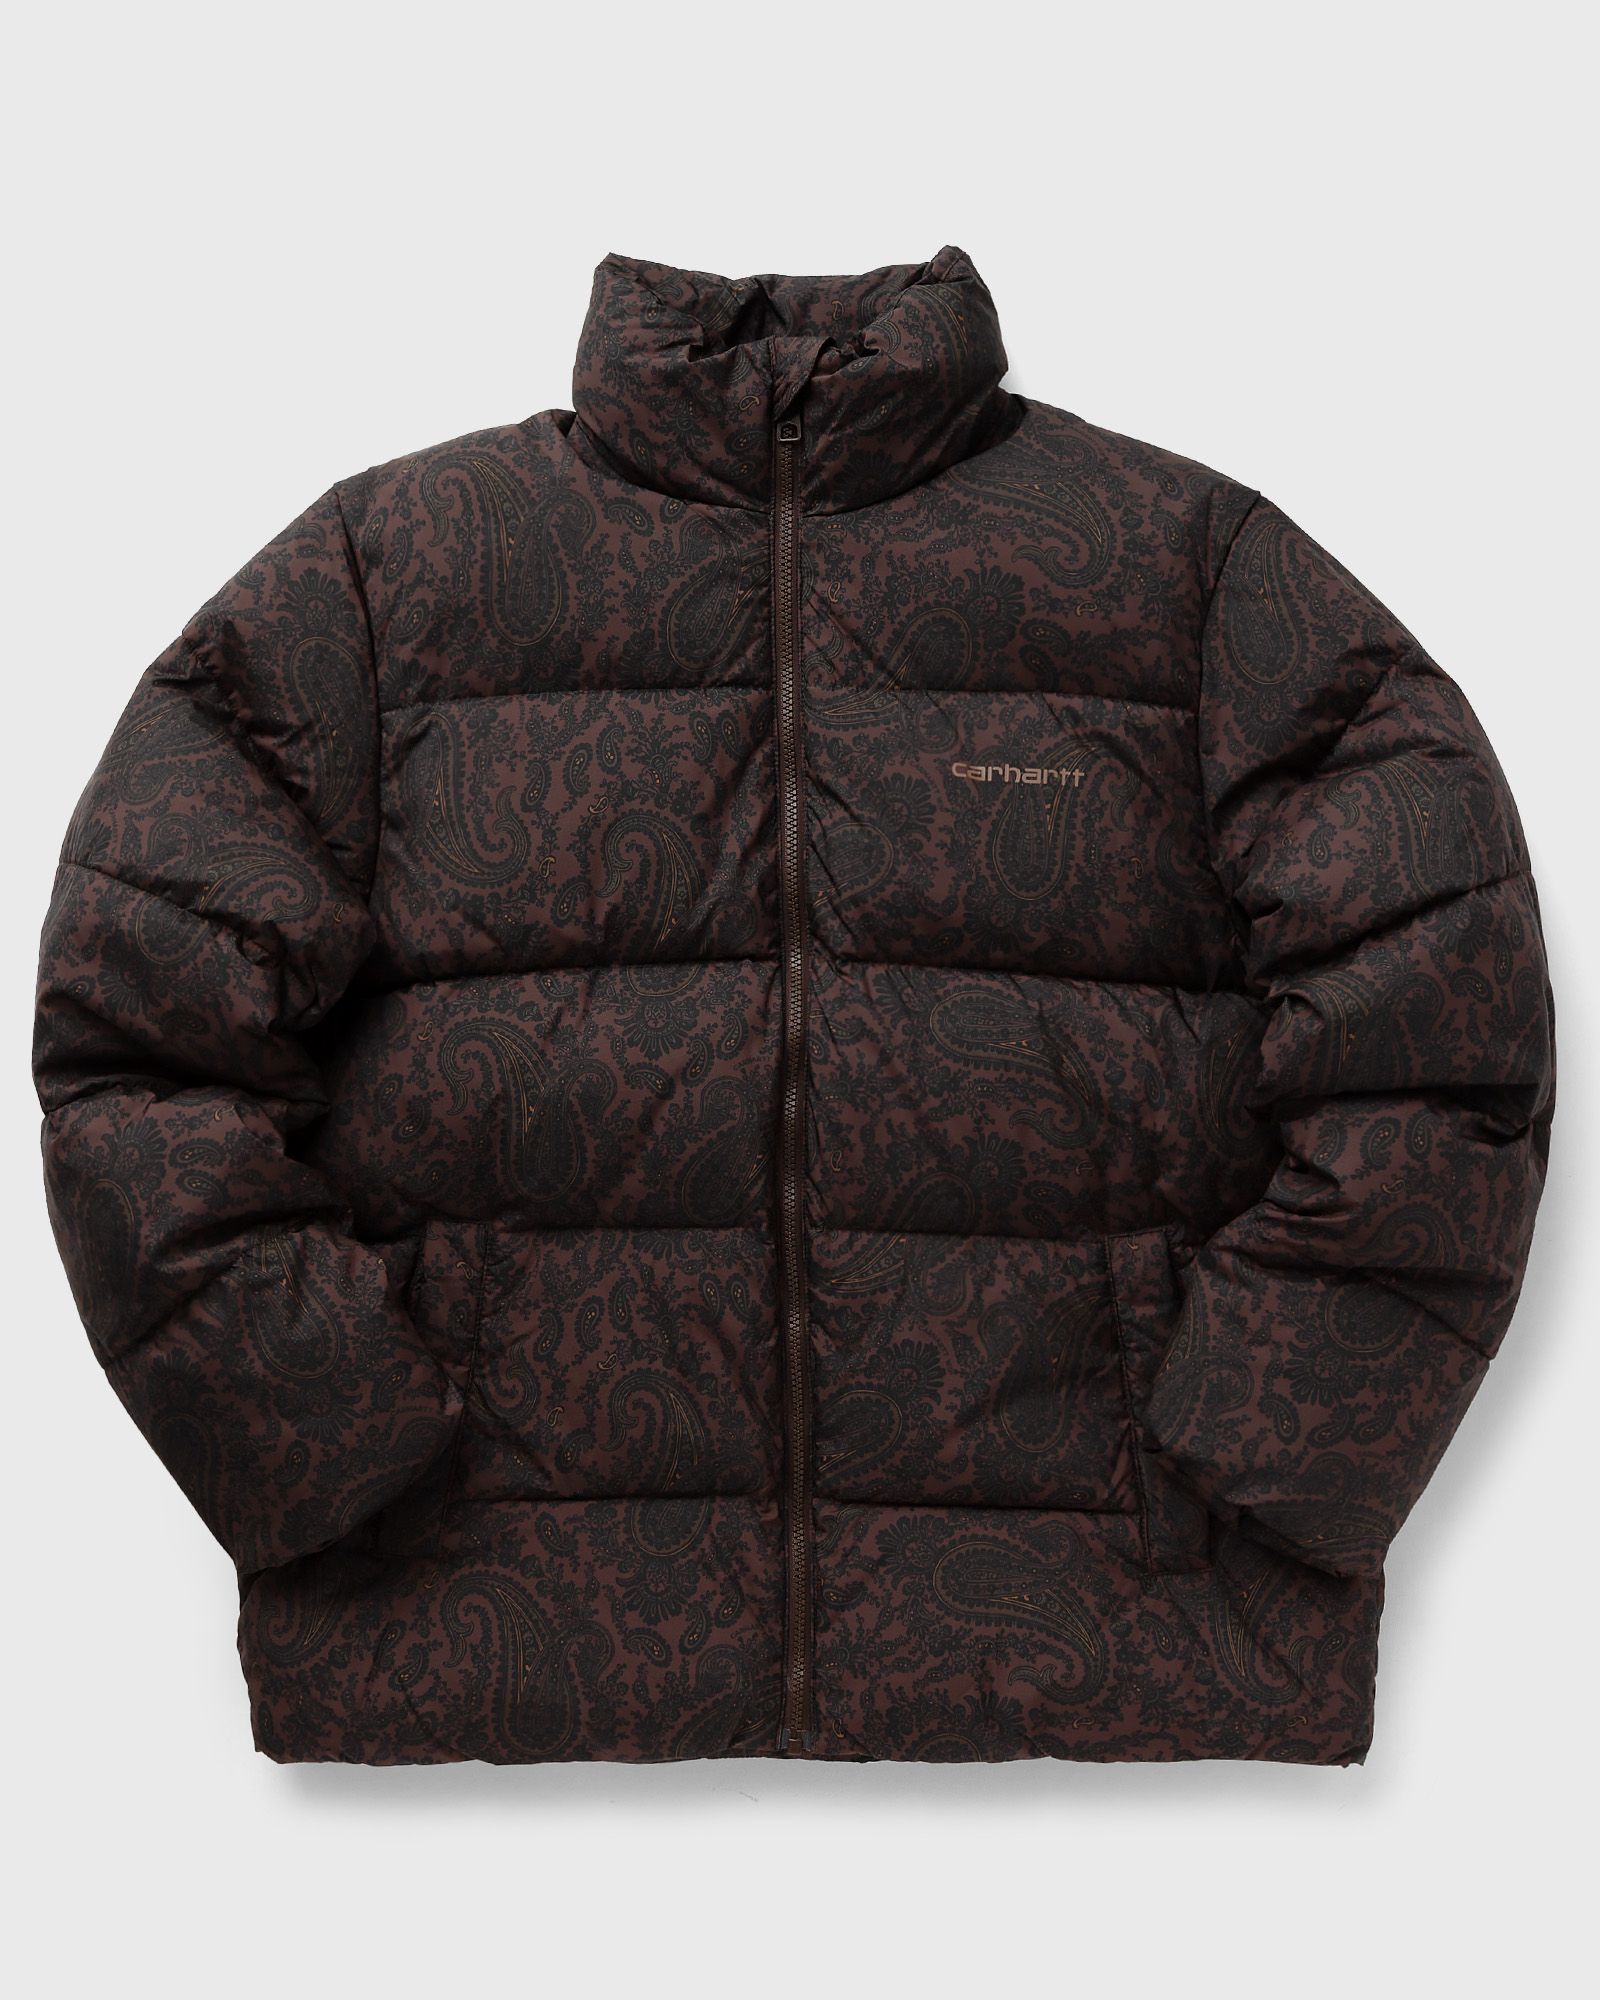 Carhartt WIP - springfield jacket men down & puffer jackets brown in größe:xl